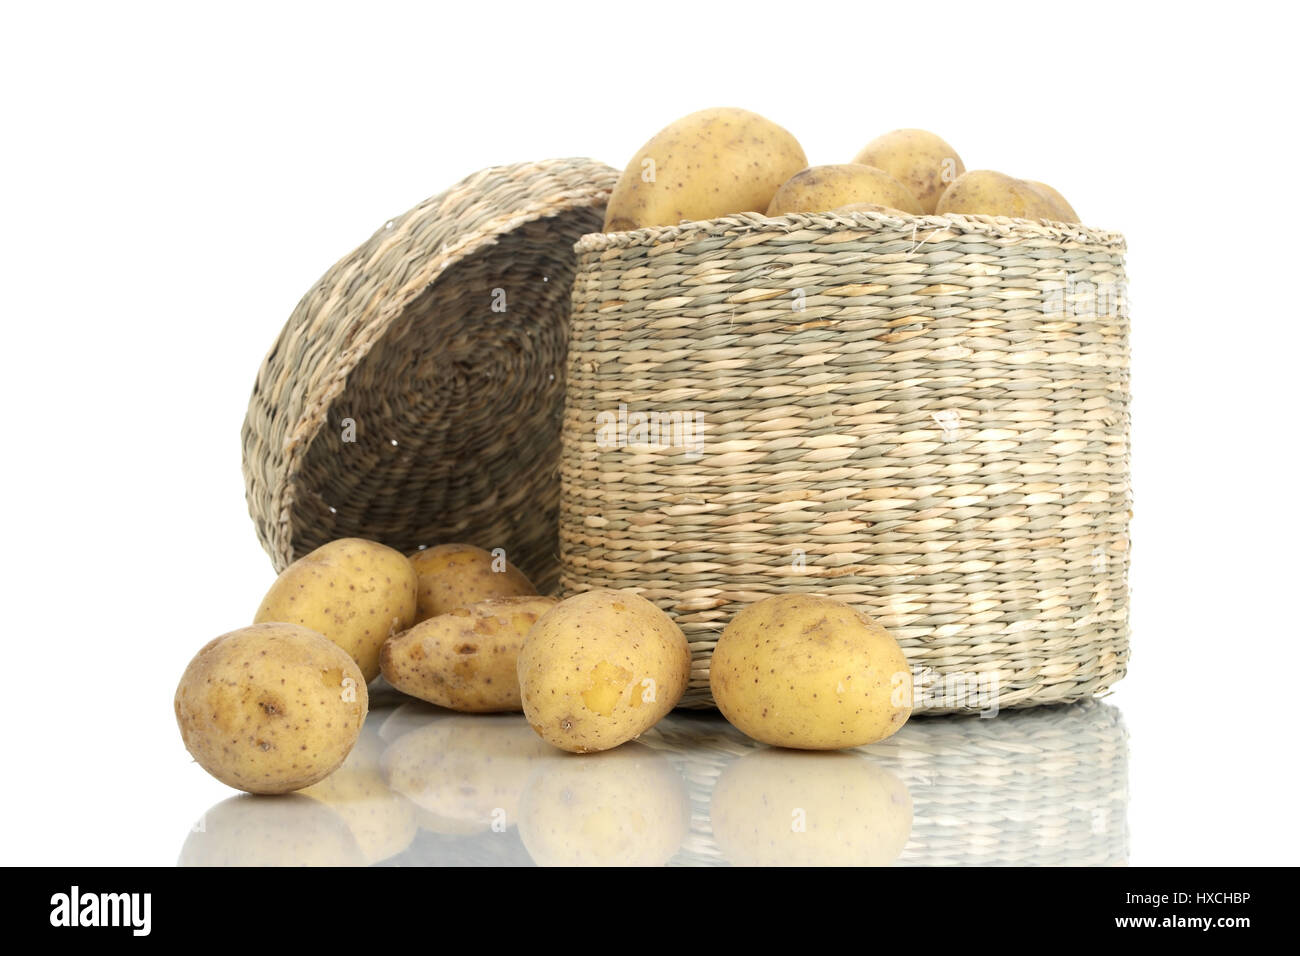 Basket with potatoes, Korb mit Kartoffeln Stock Photo